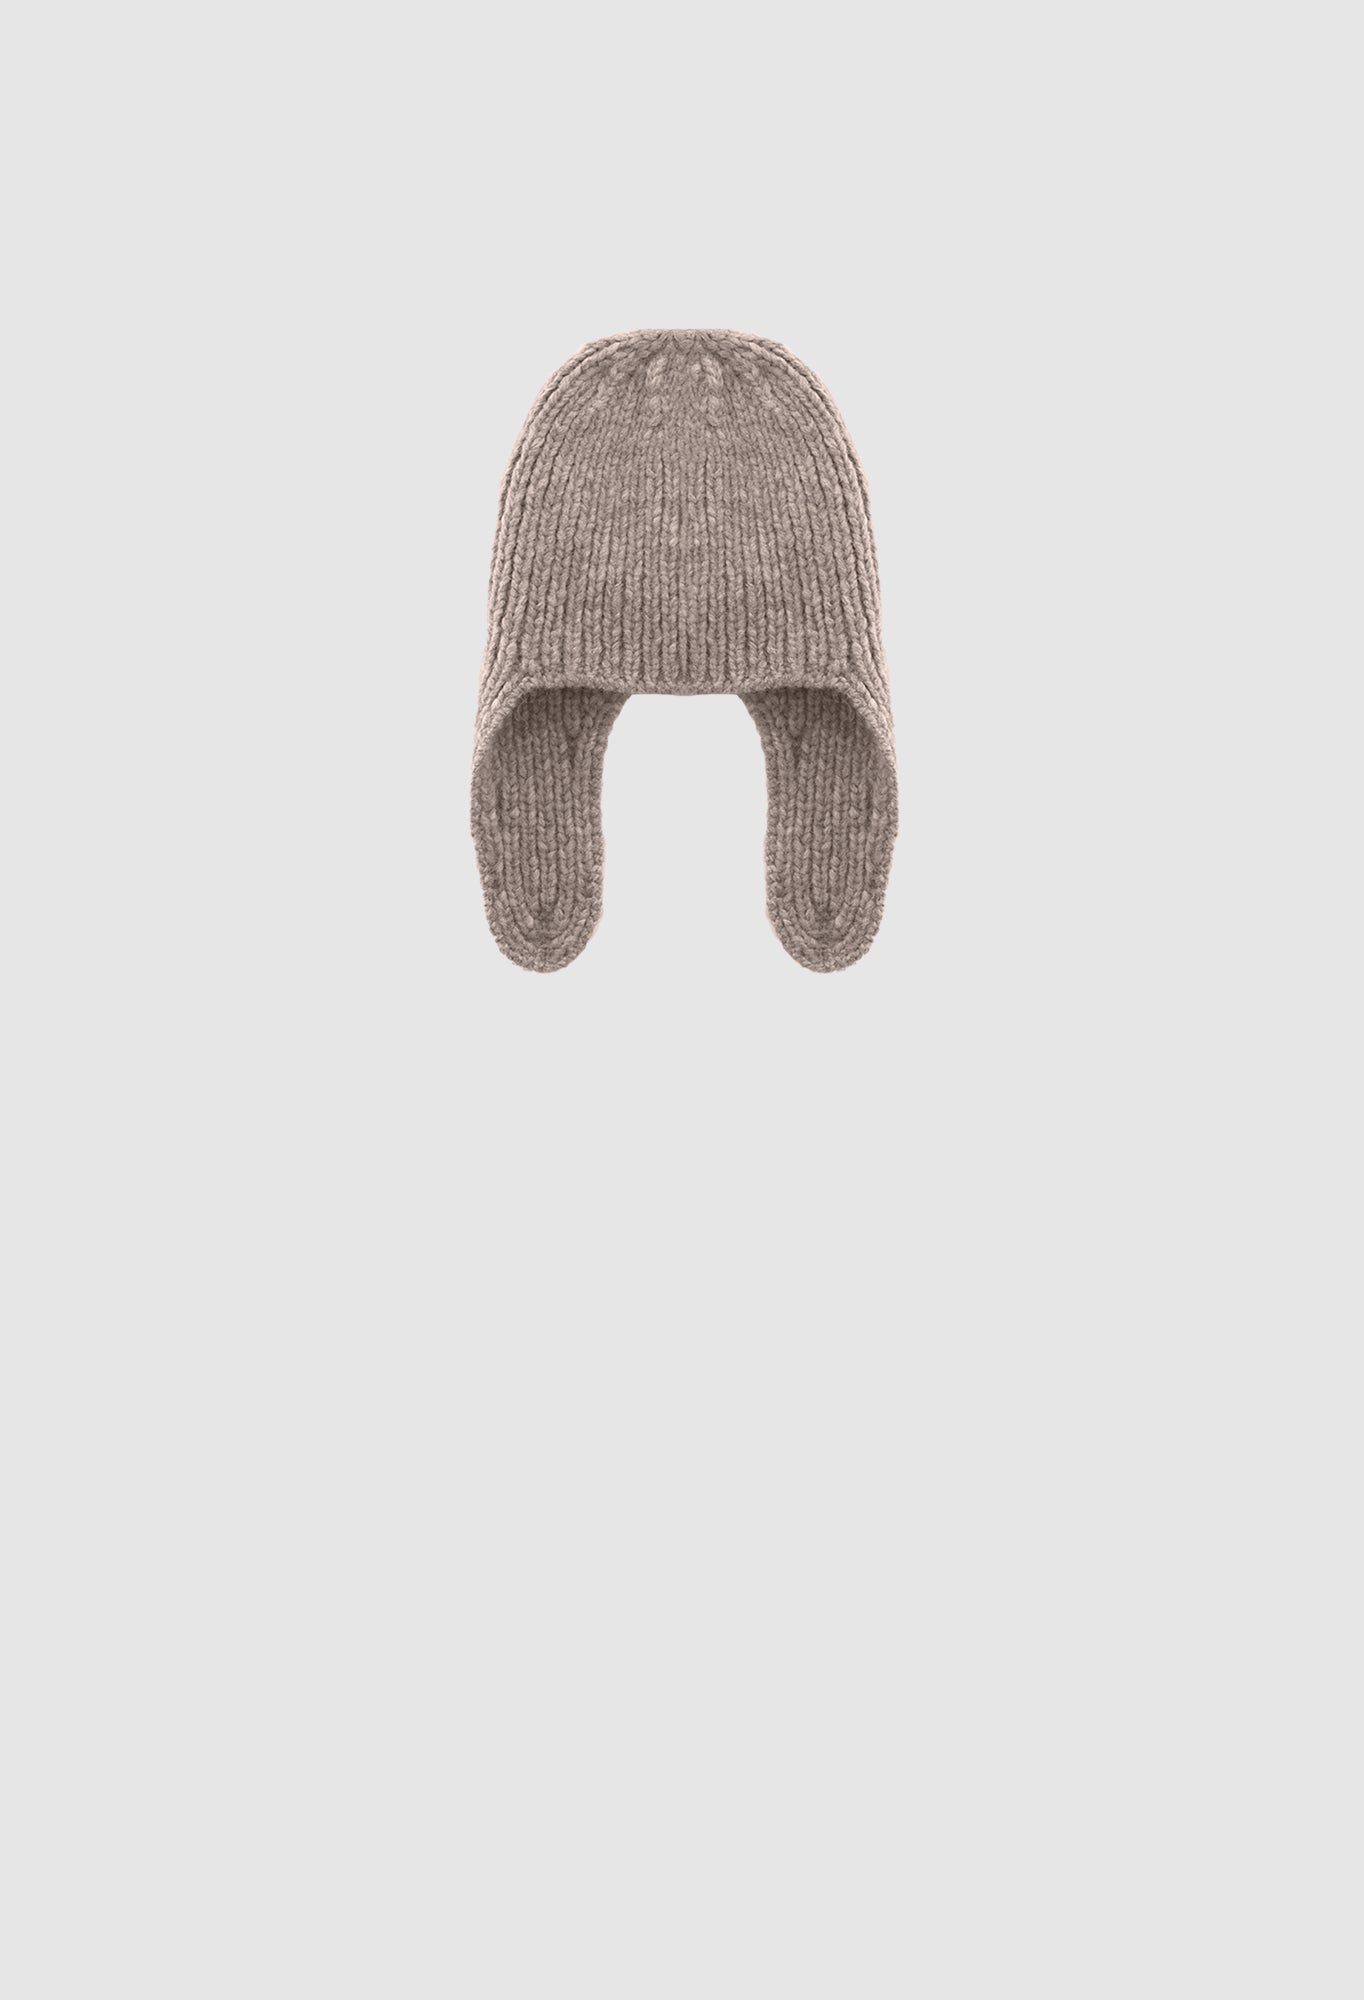 COLETTE - Hand-Knit Hat in Beige